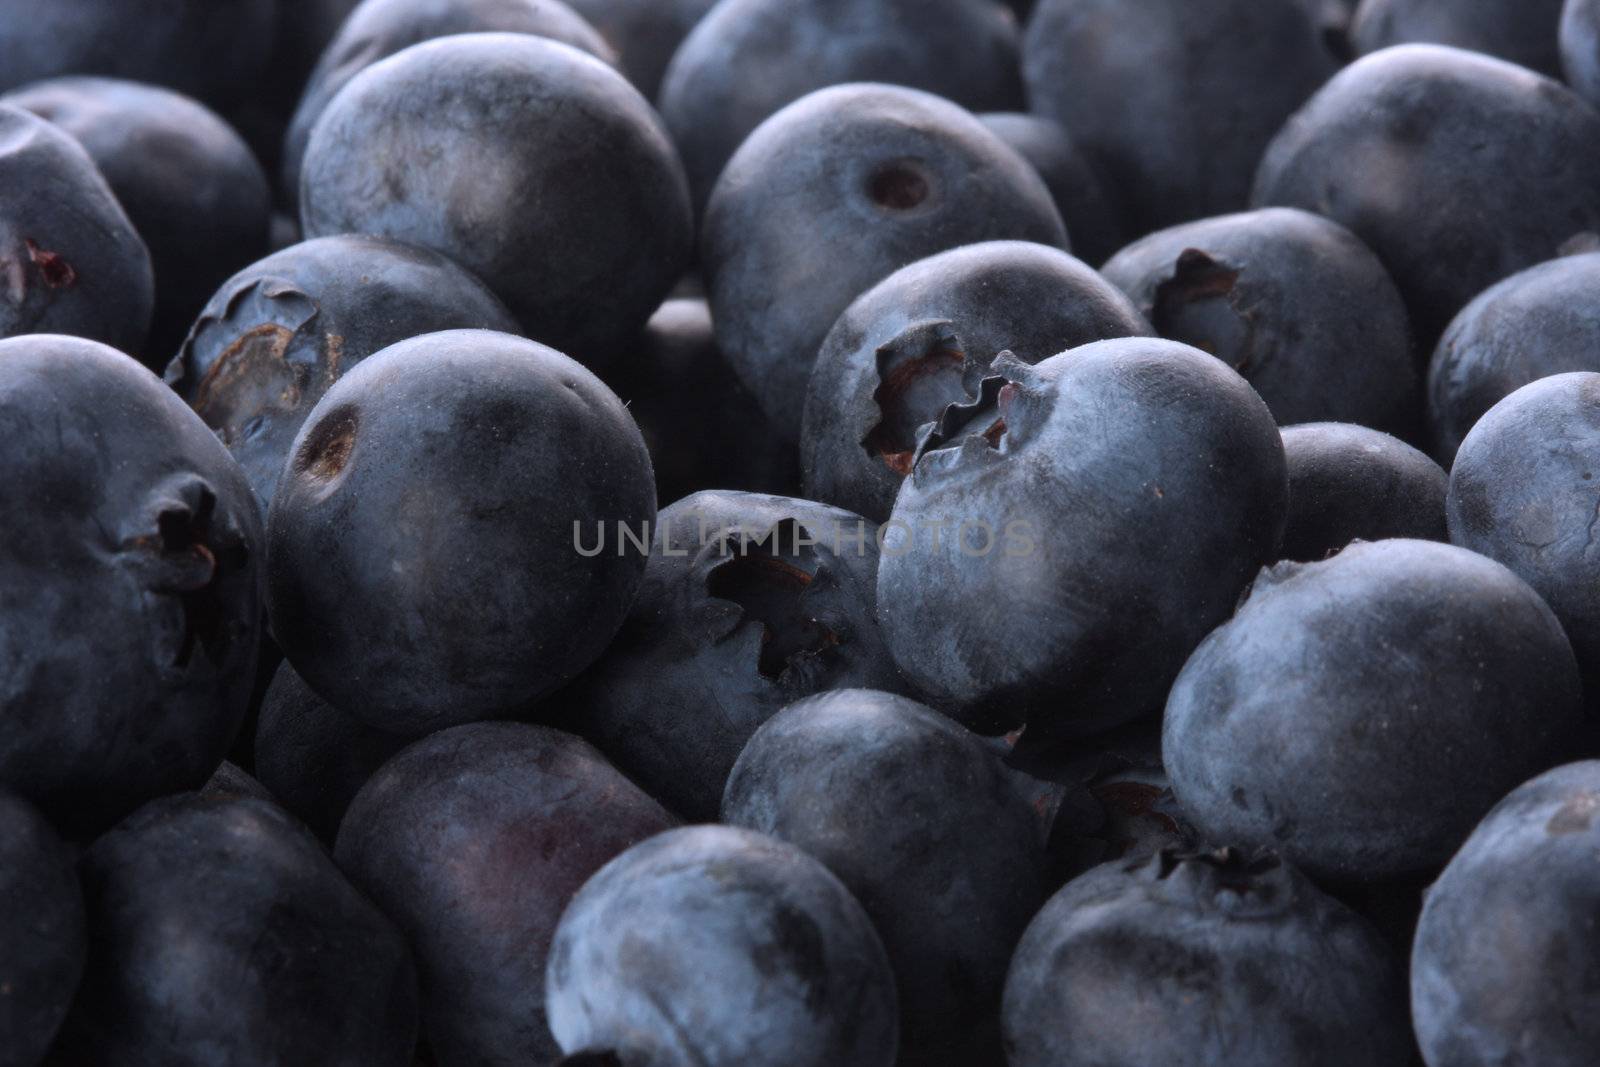 bunch of fresh blueberries, good fruit background